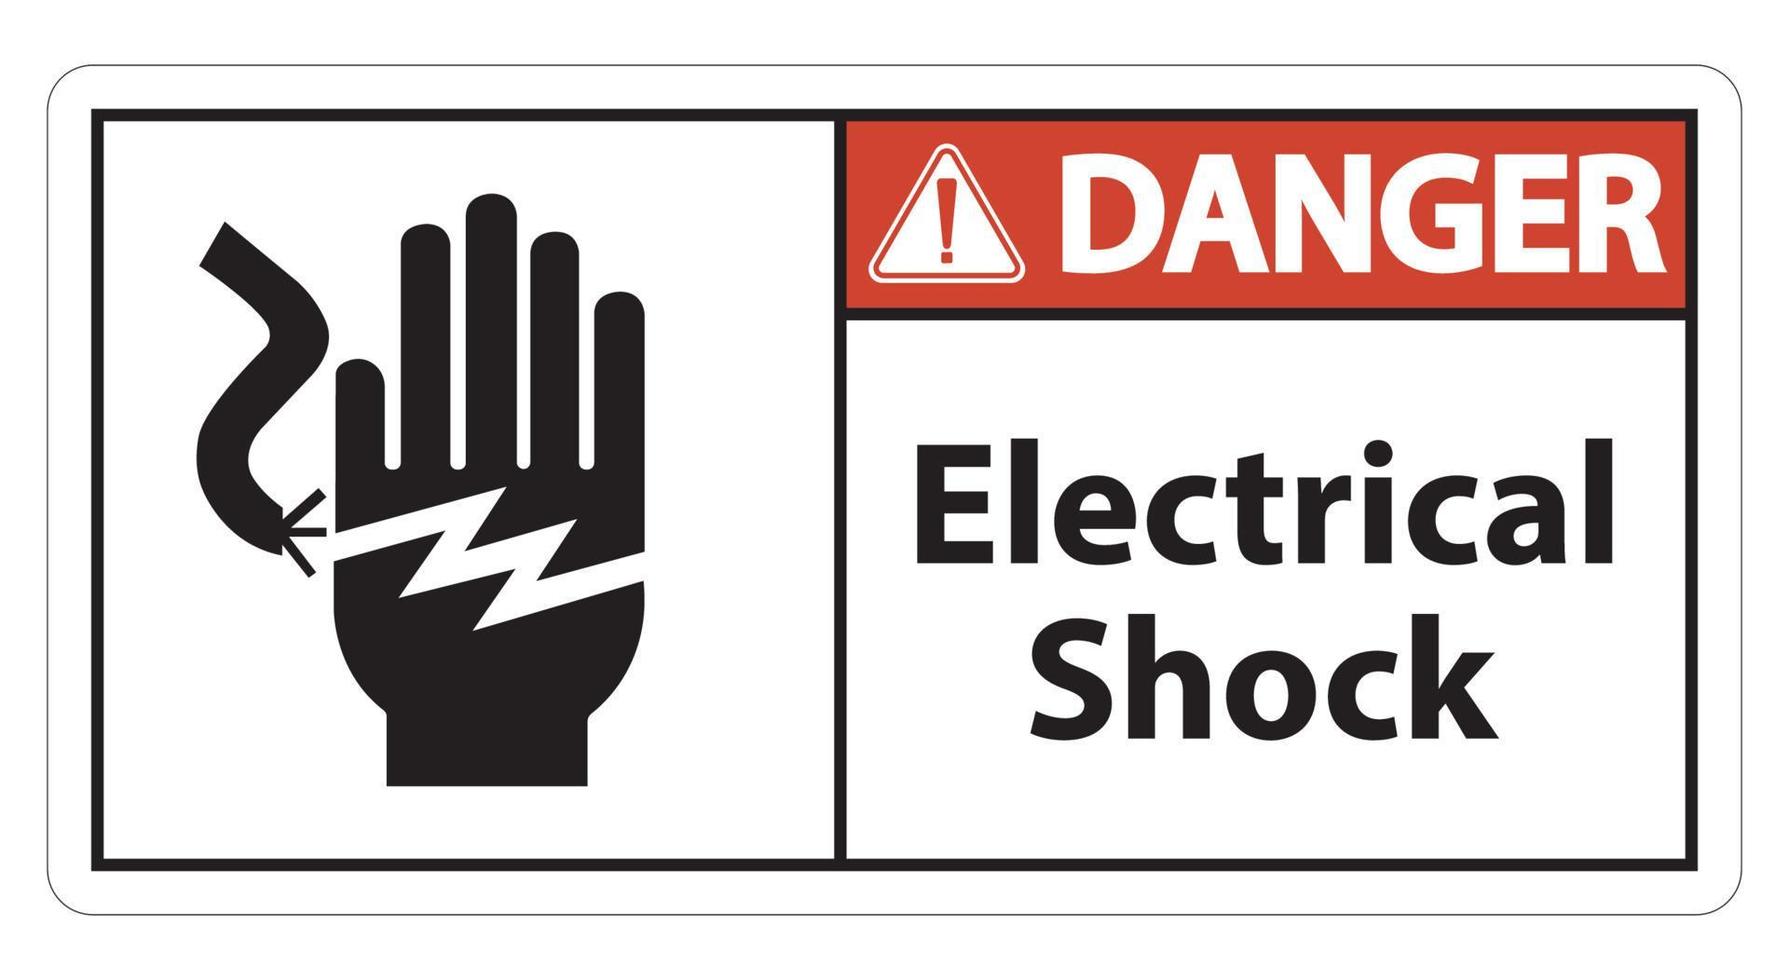 Signo de símbolo de electrocución de descarga eléctrica aislado sobre fondo blanco, ilustración vectorial eps.10 vector